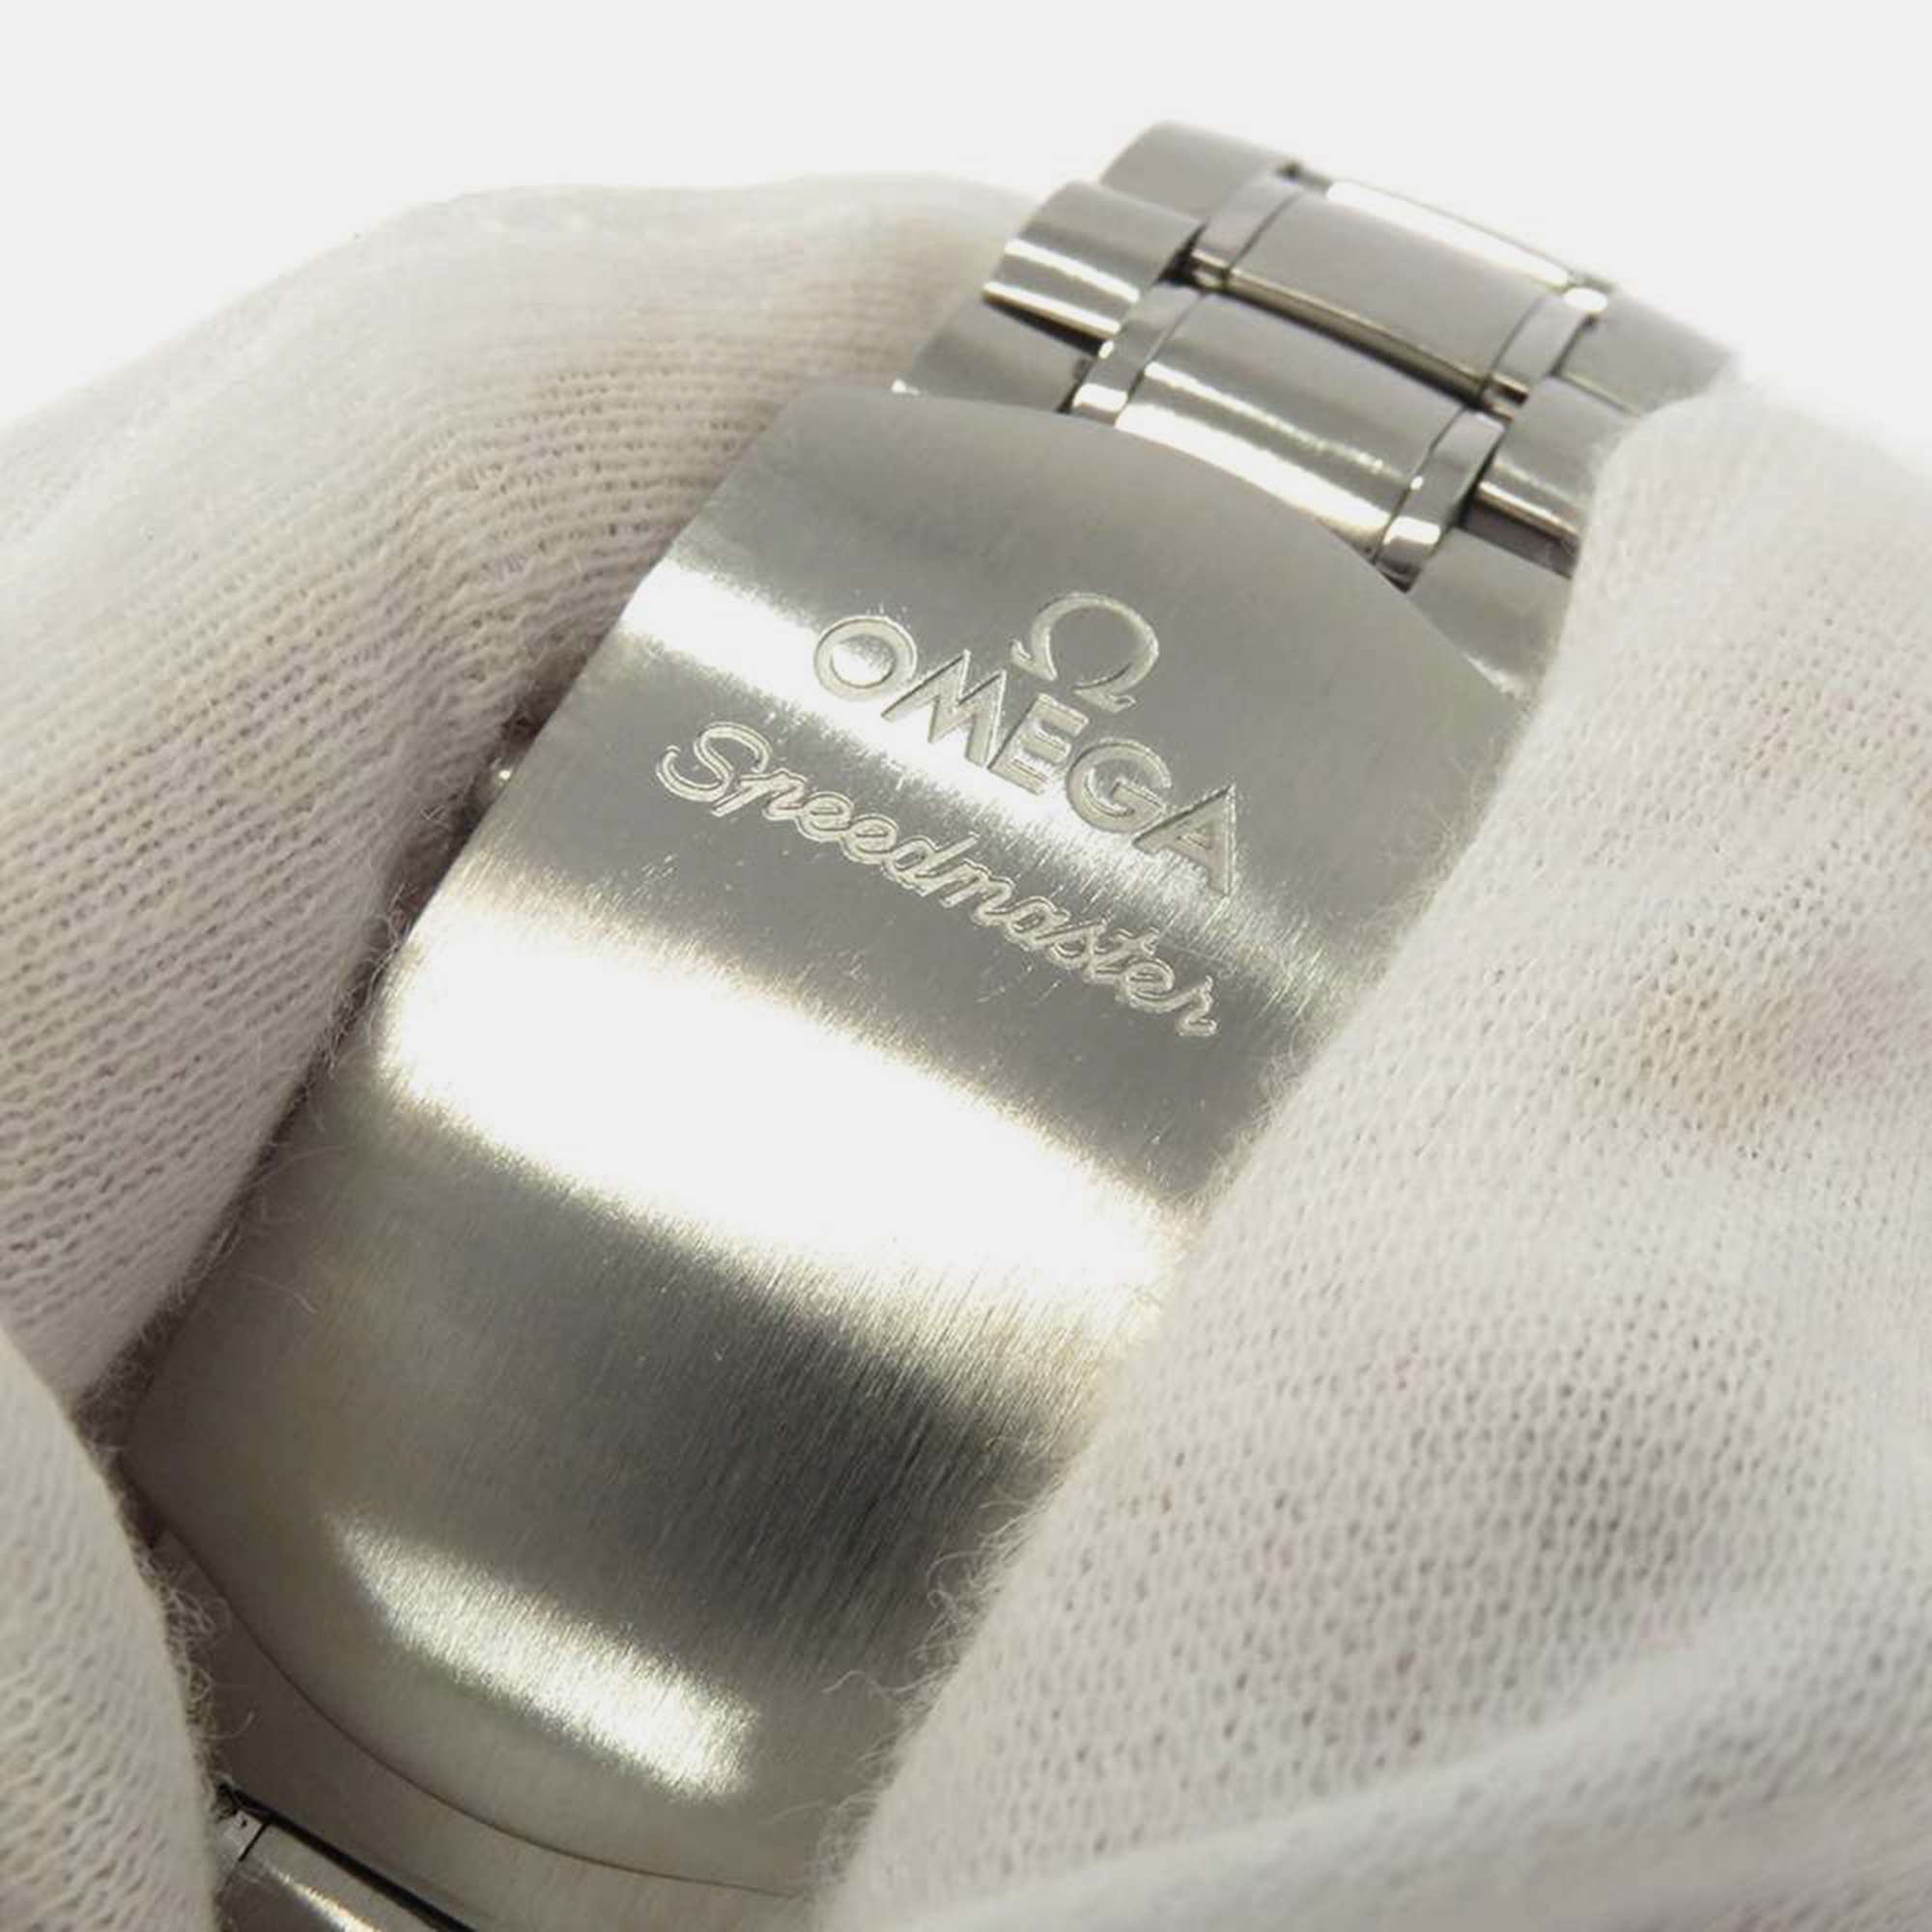 Omega Black Stainless Steel Speedmaster 326.30.40.50.01.002 Automatic Men's Wristwatch 40 Mm